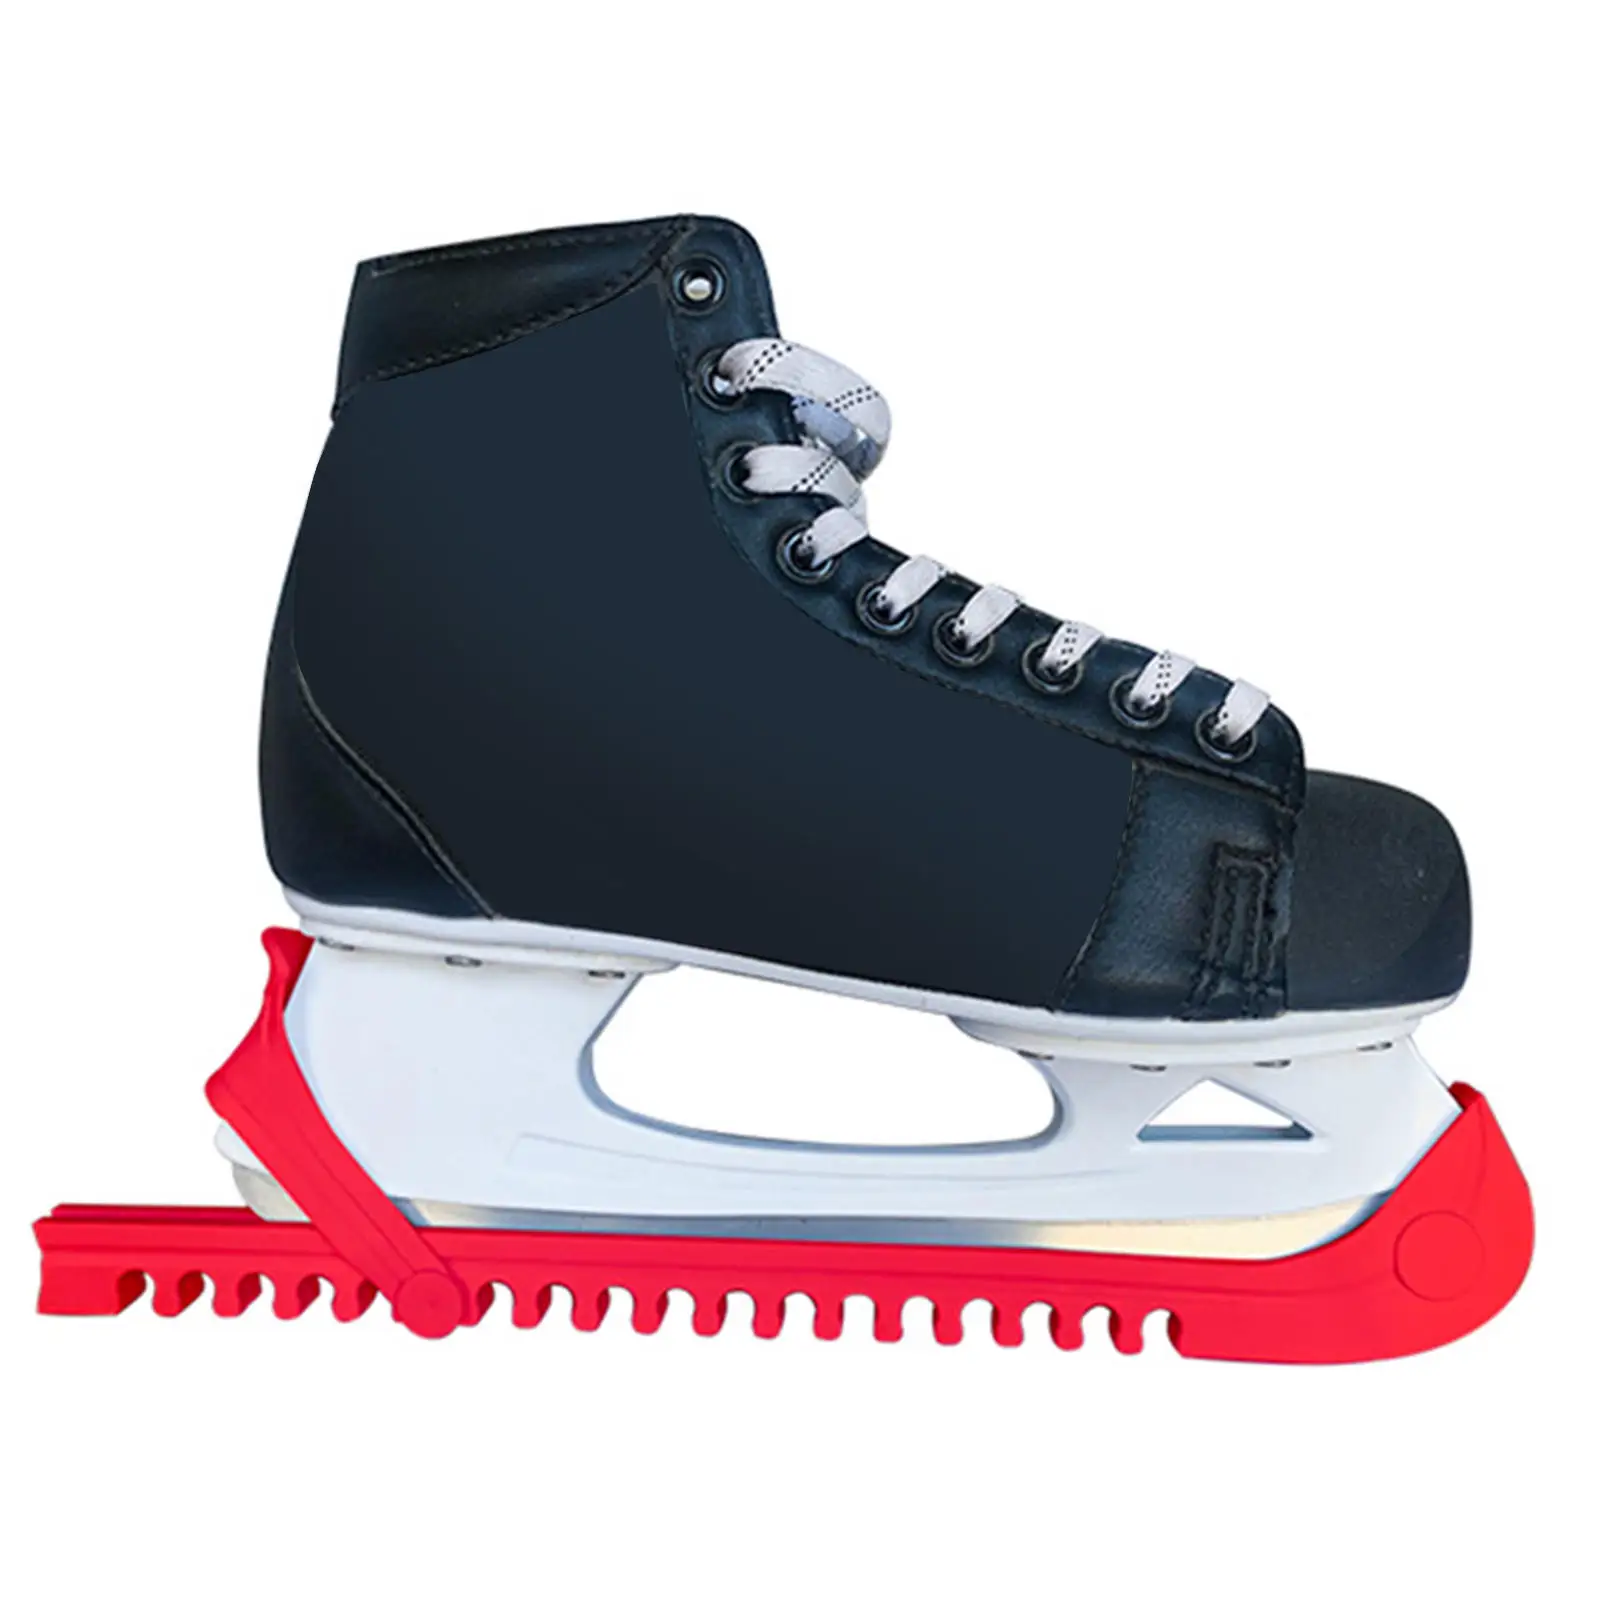 1 Pair Skate Blade Guards Adjustable Ice Hockey Figure Skate Covers Protect Tool 